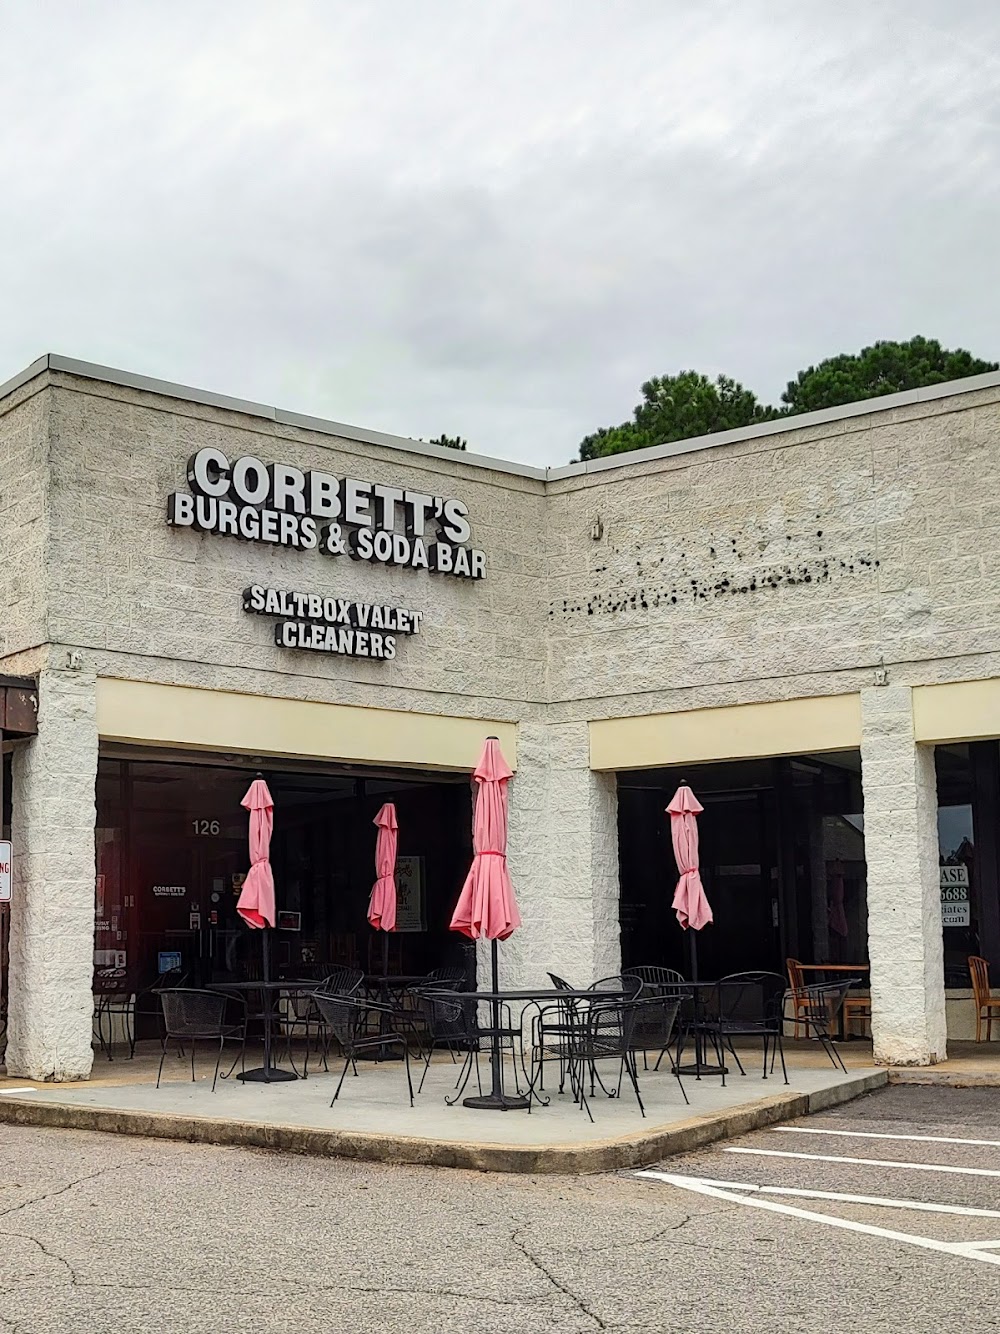 Corbett’s Burgers & Soda Bar